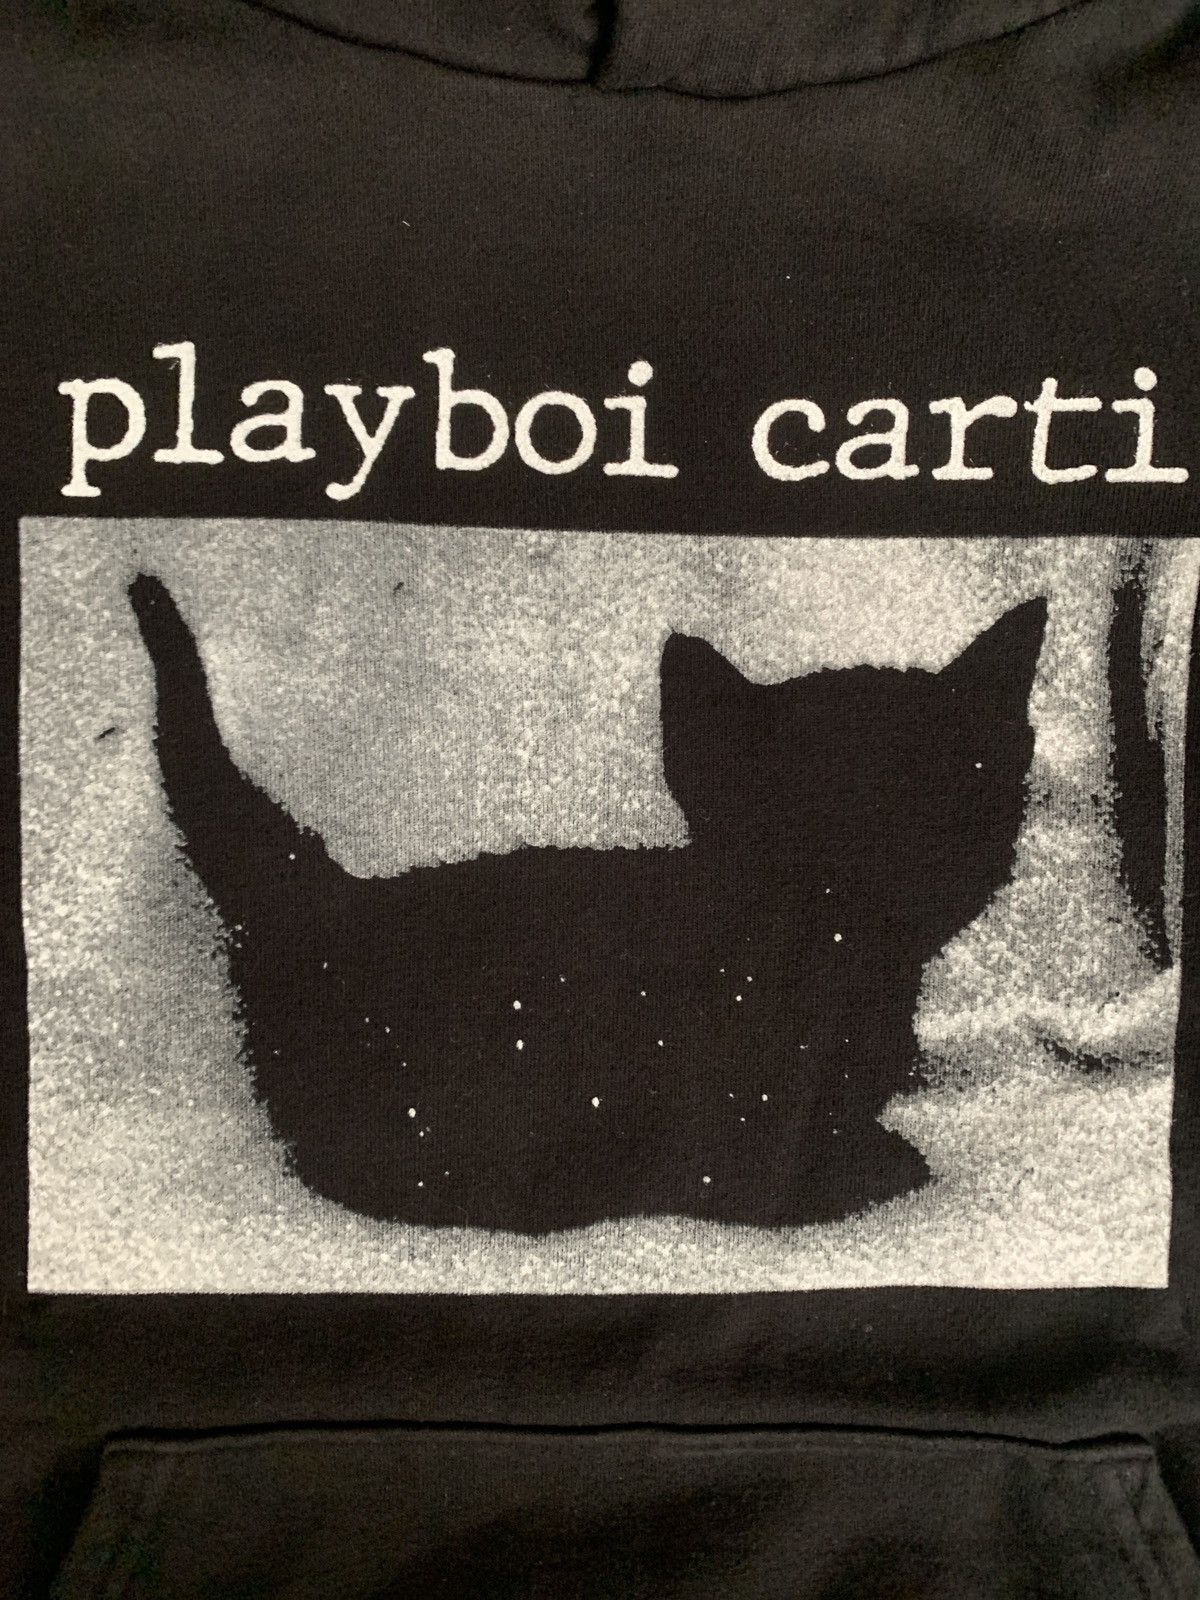 Playboi Carti Playboi Carti WLR Black Cat Hoodie Size US S / EU 44-46 / 1 - 2 Preview